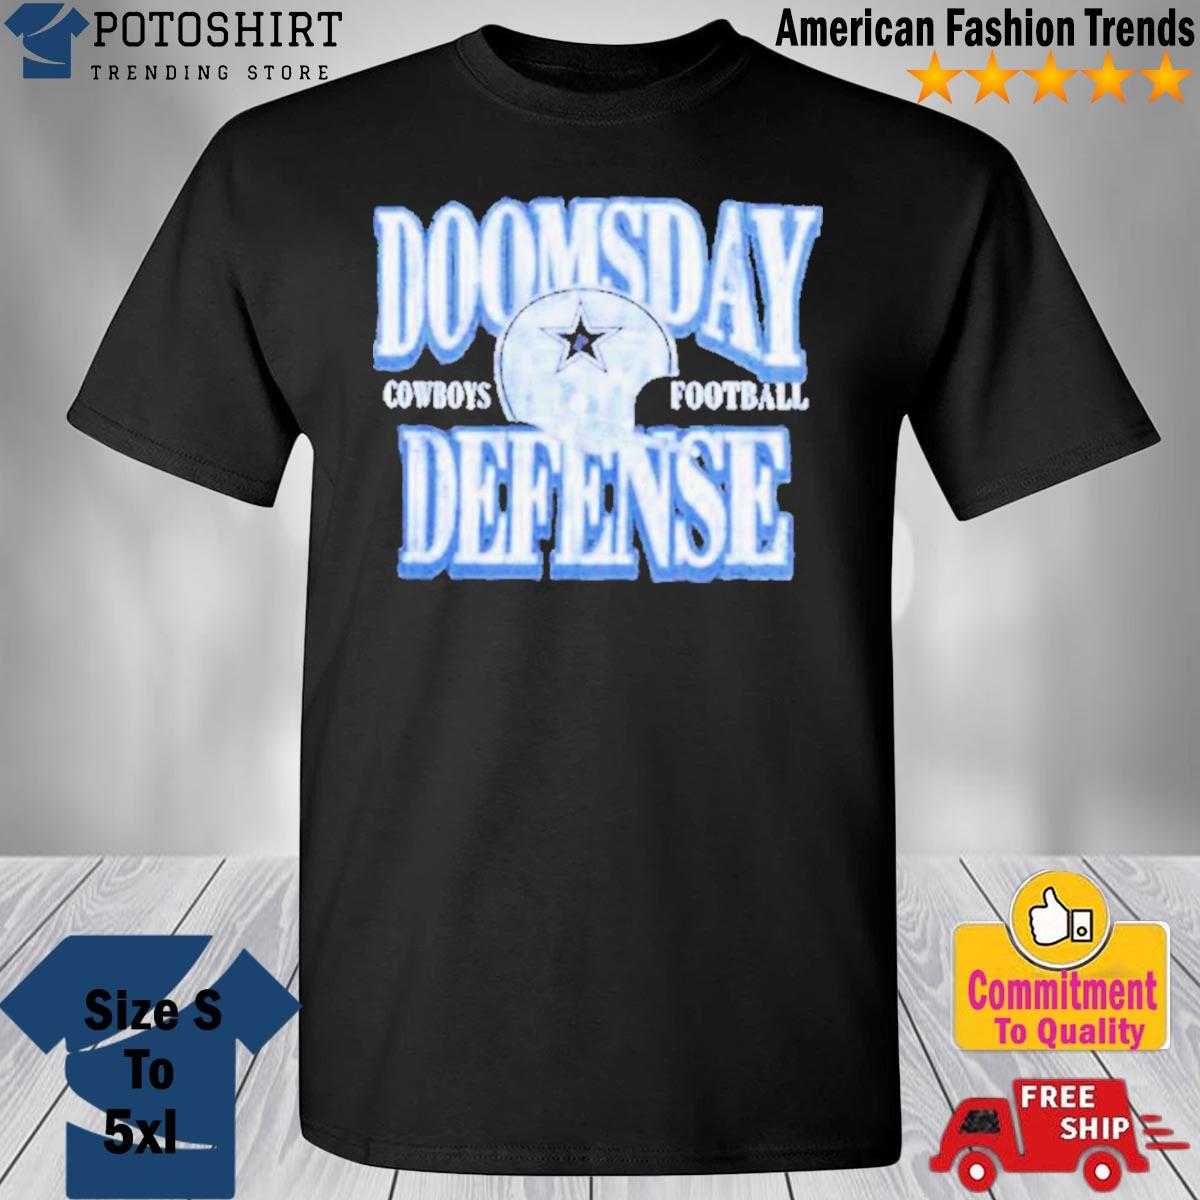 doomsday defense shirt